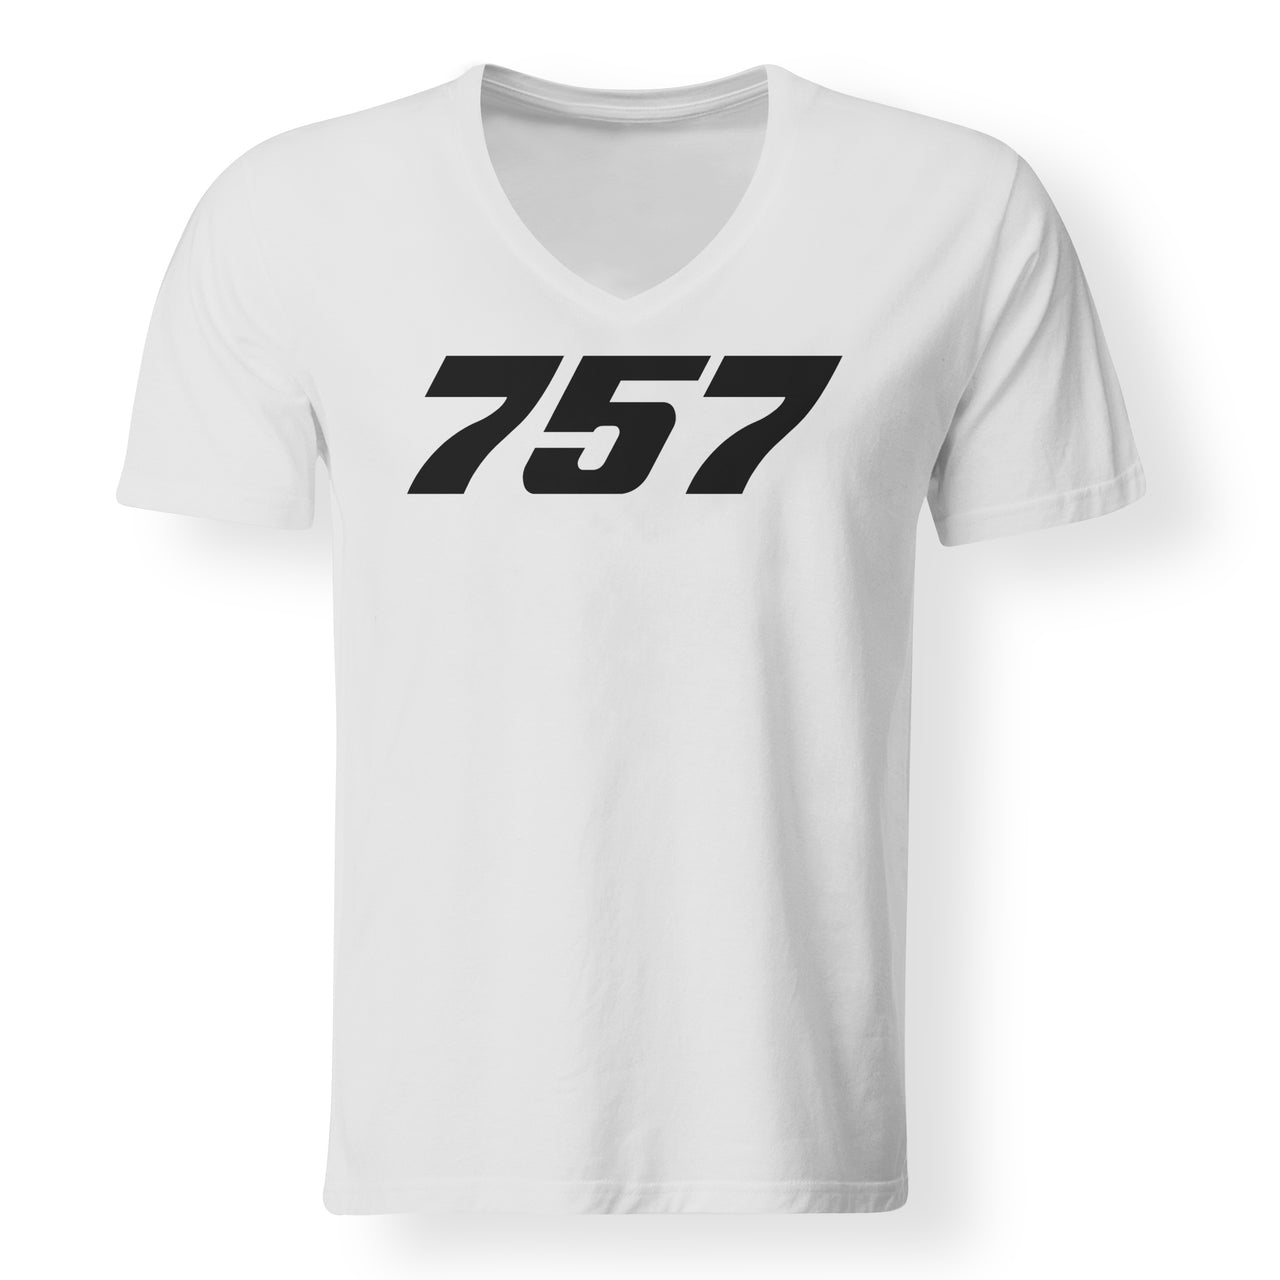 757 Flat Text Designed V-Neck T-Shirts